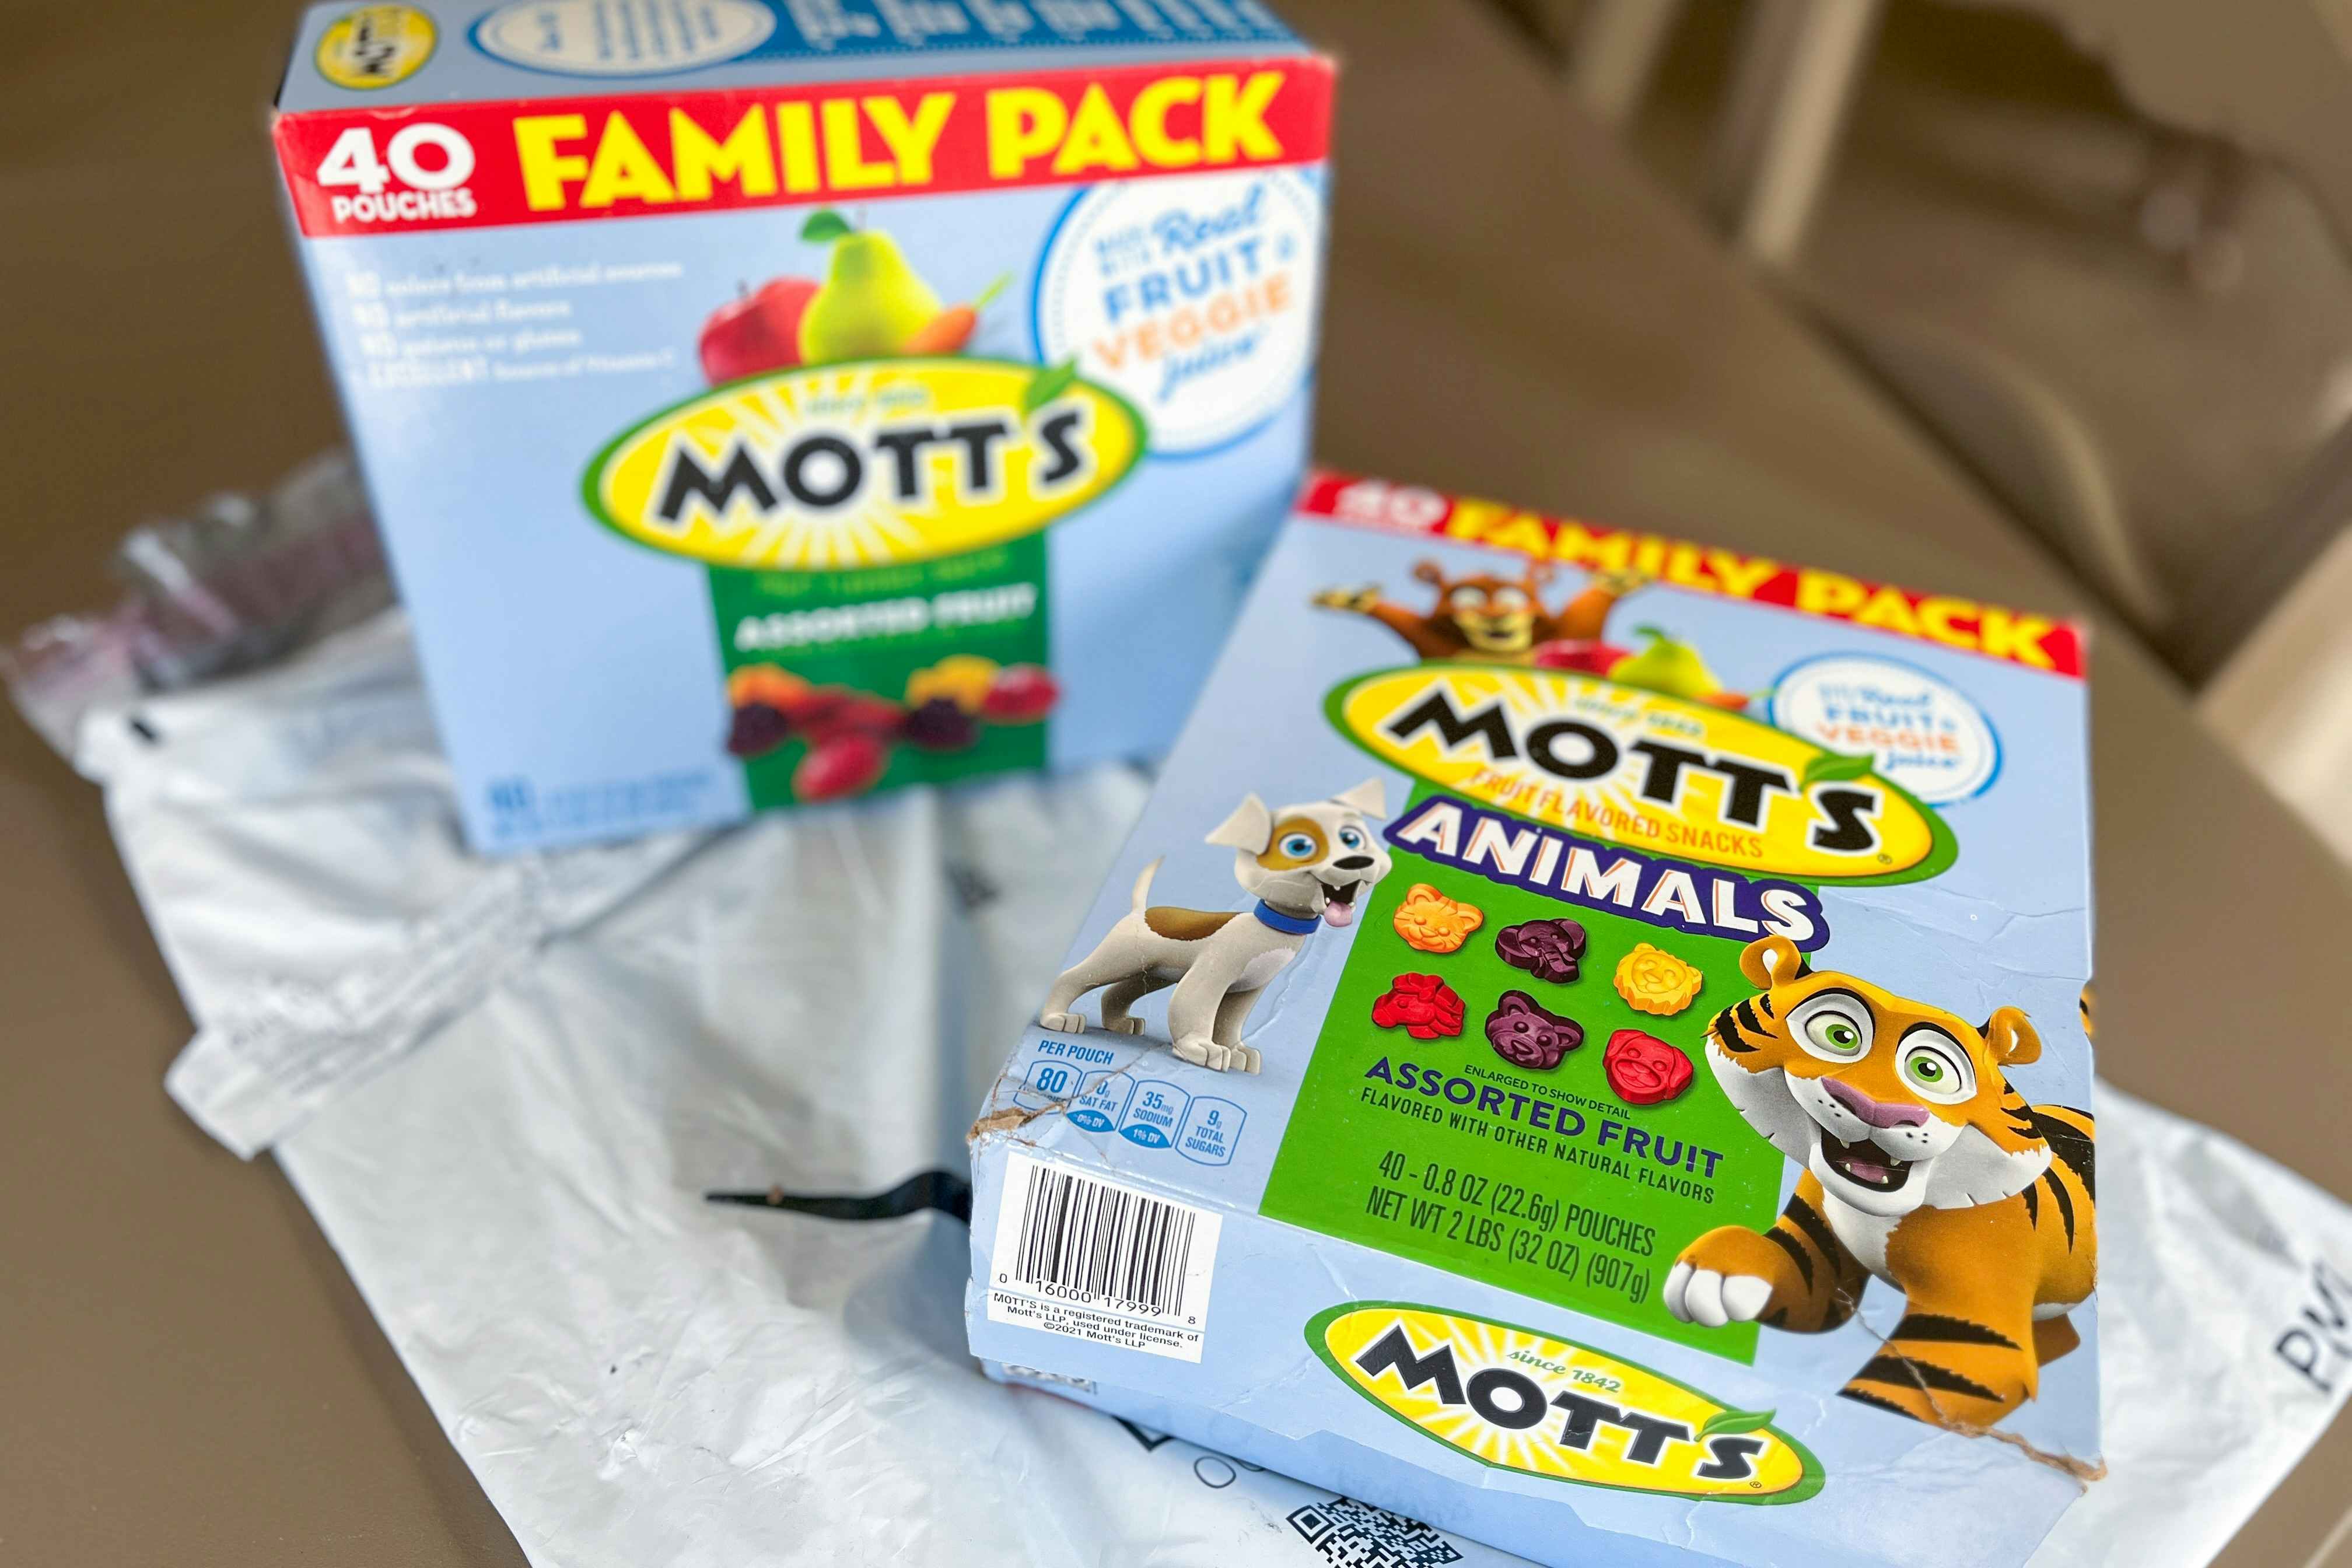 Mott's Fruit Snacks 40-Pack, as Low as $5.19 on Amazon ($0.13 Per Pack)